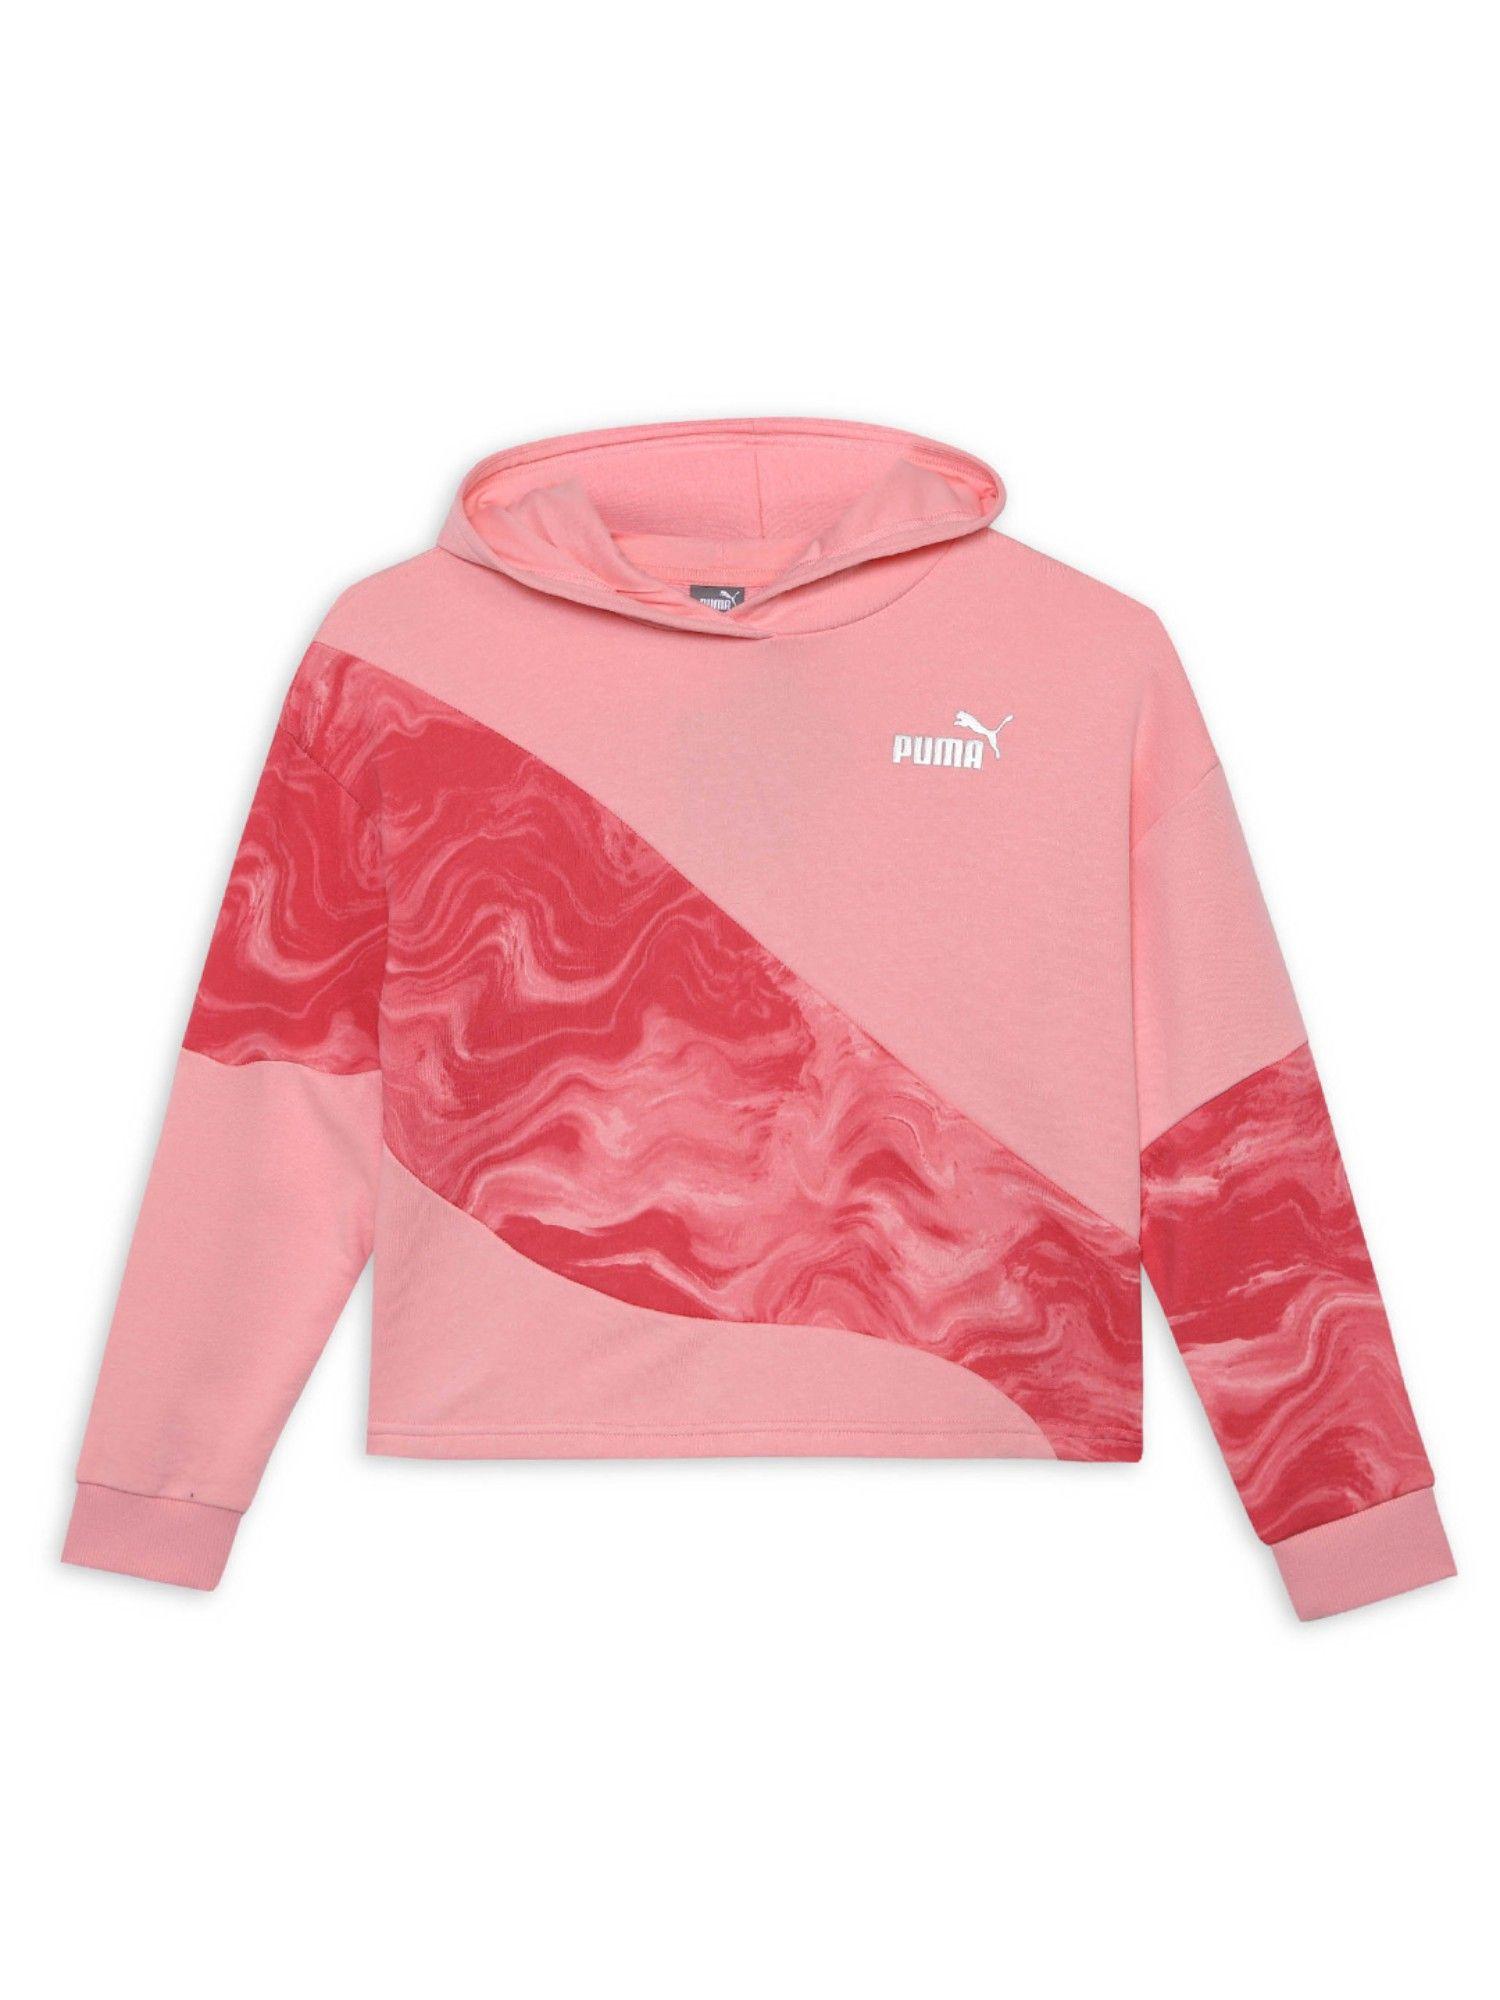 power marbleized girls pink hoodies